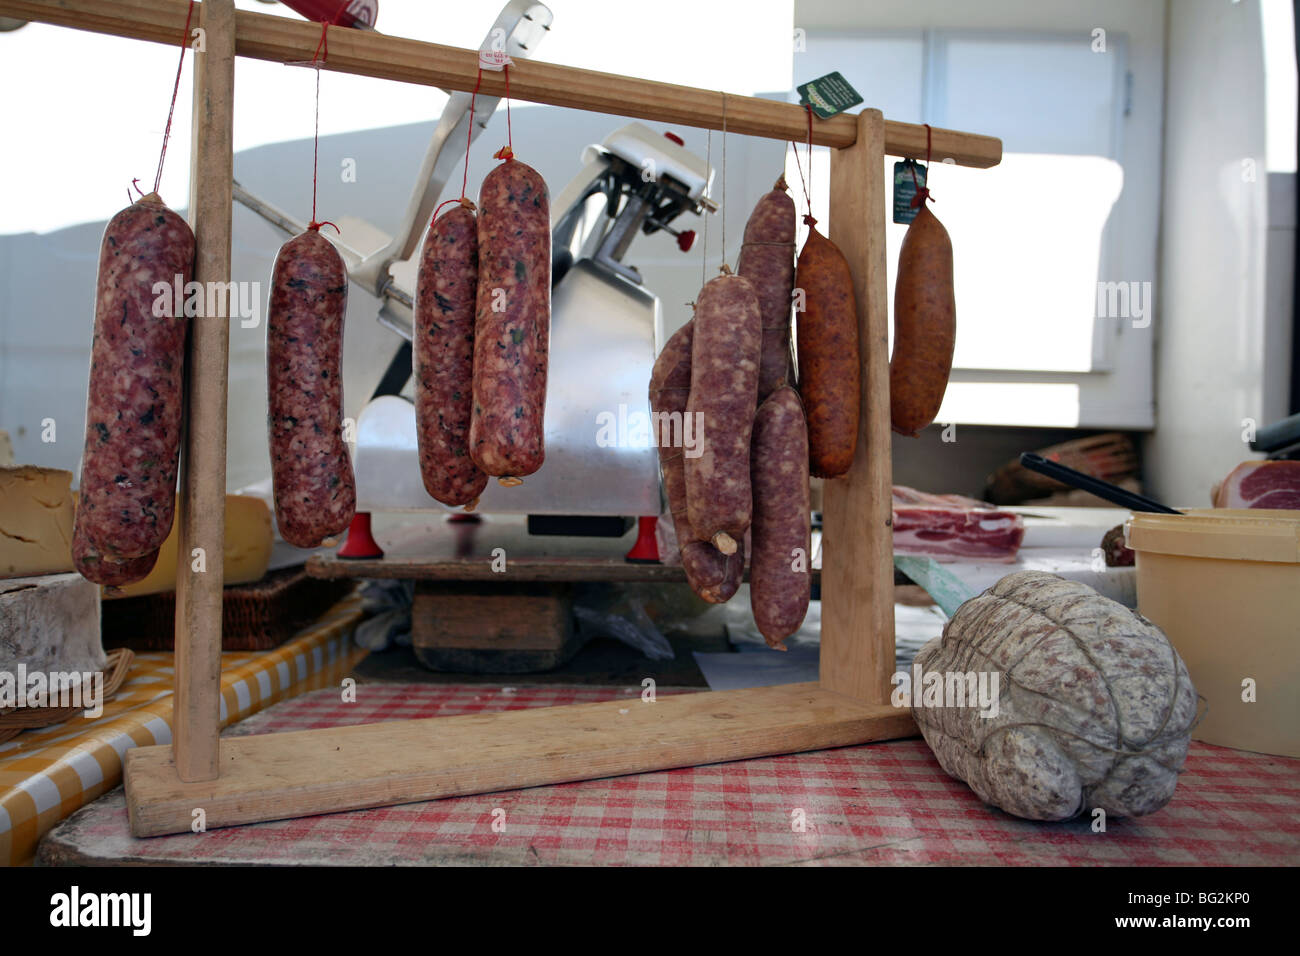 Charcuterie - salami / cured sausage / saucisson sec Stock Photo